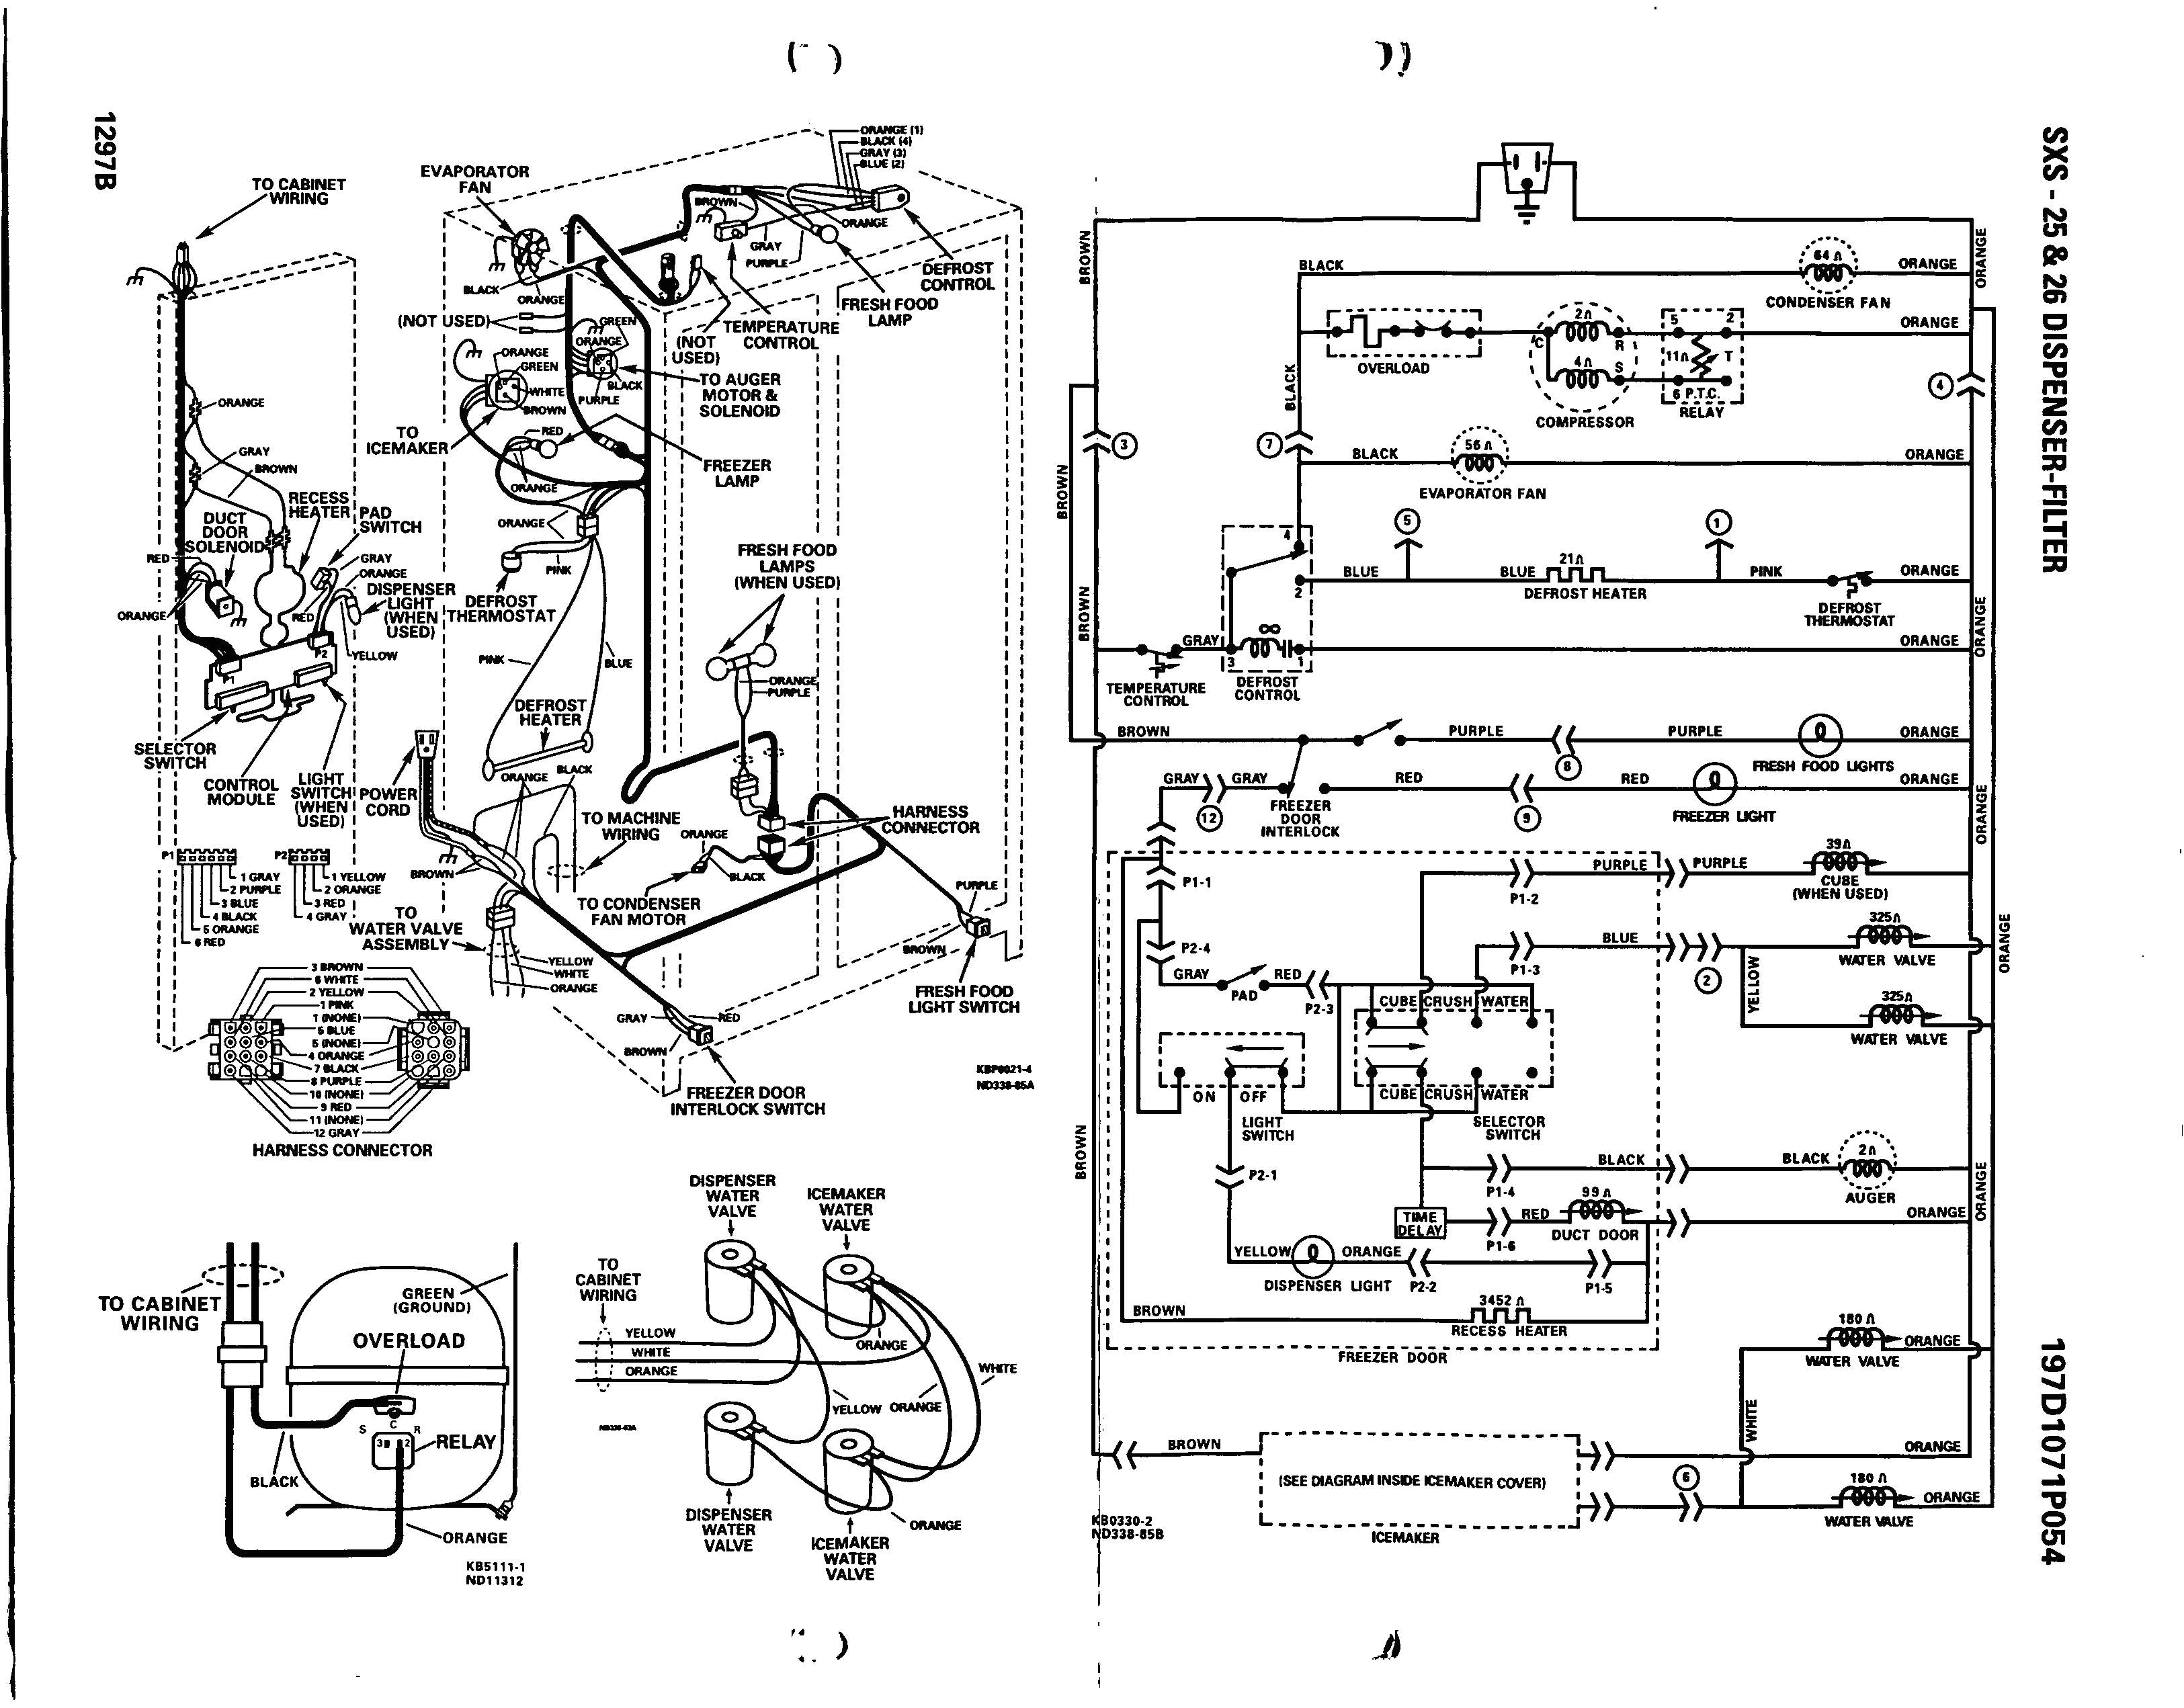 otis wiring diagram manual e book otis elevator wiring diagram pdf fresh otis parts list wire